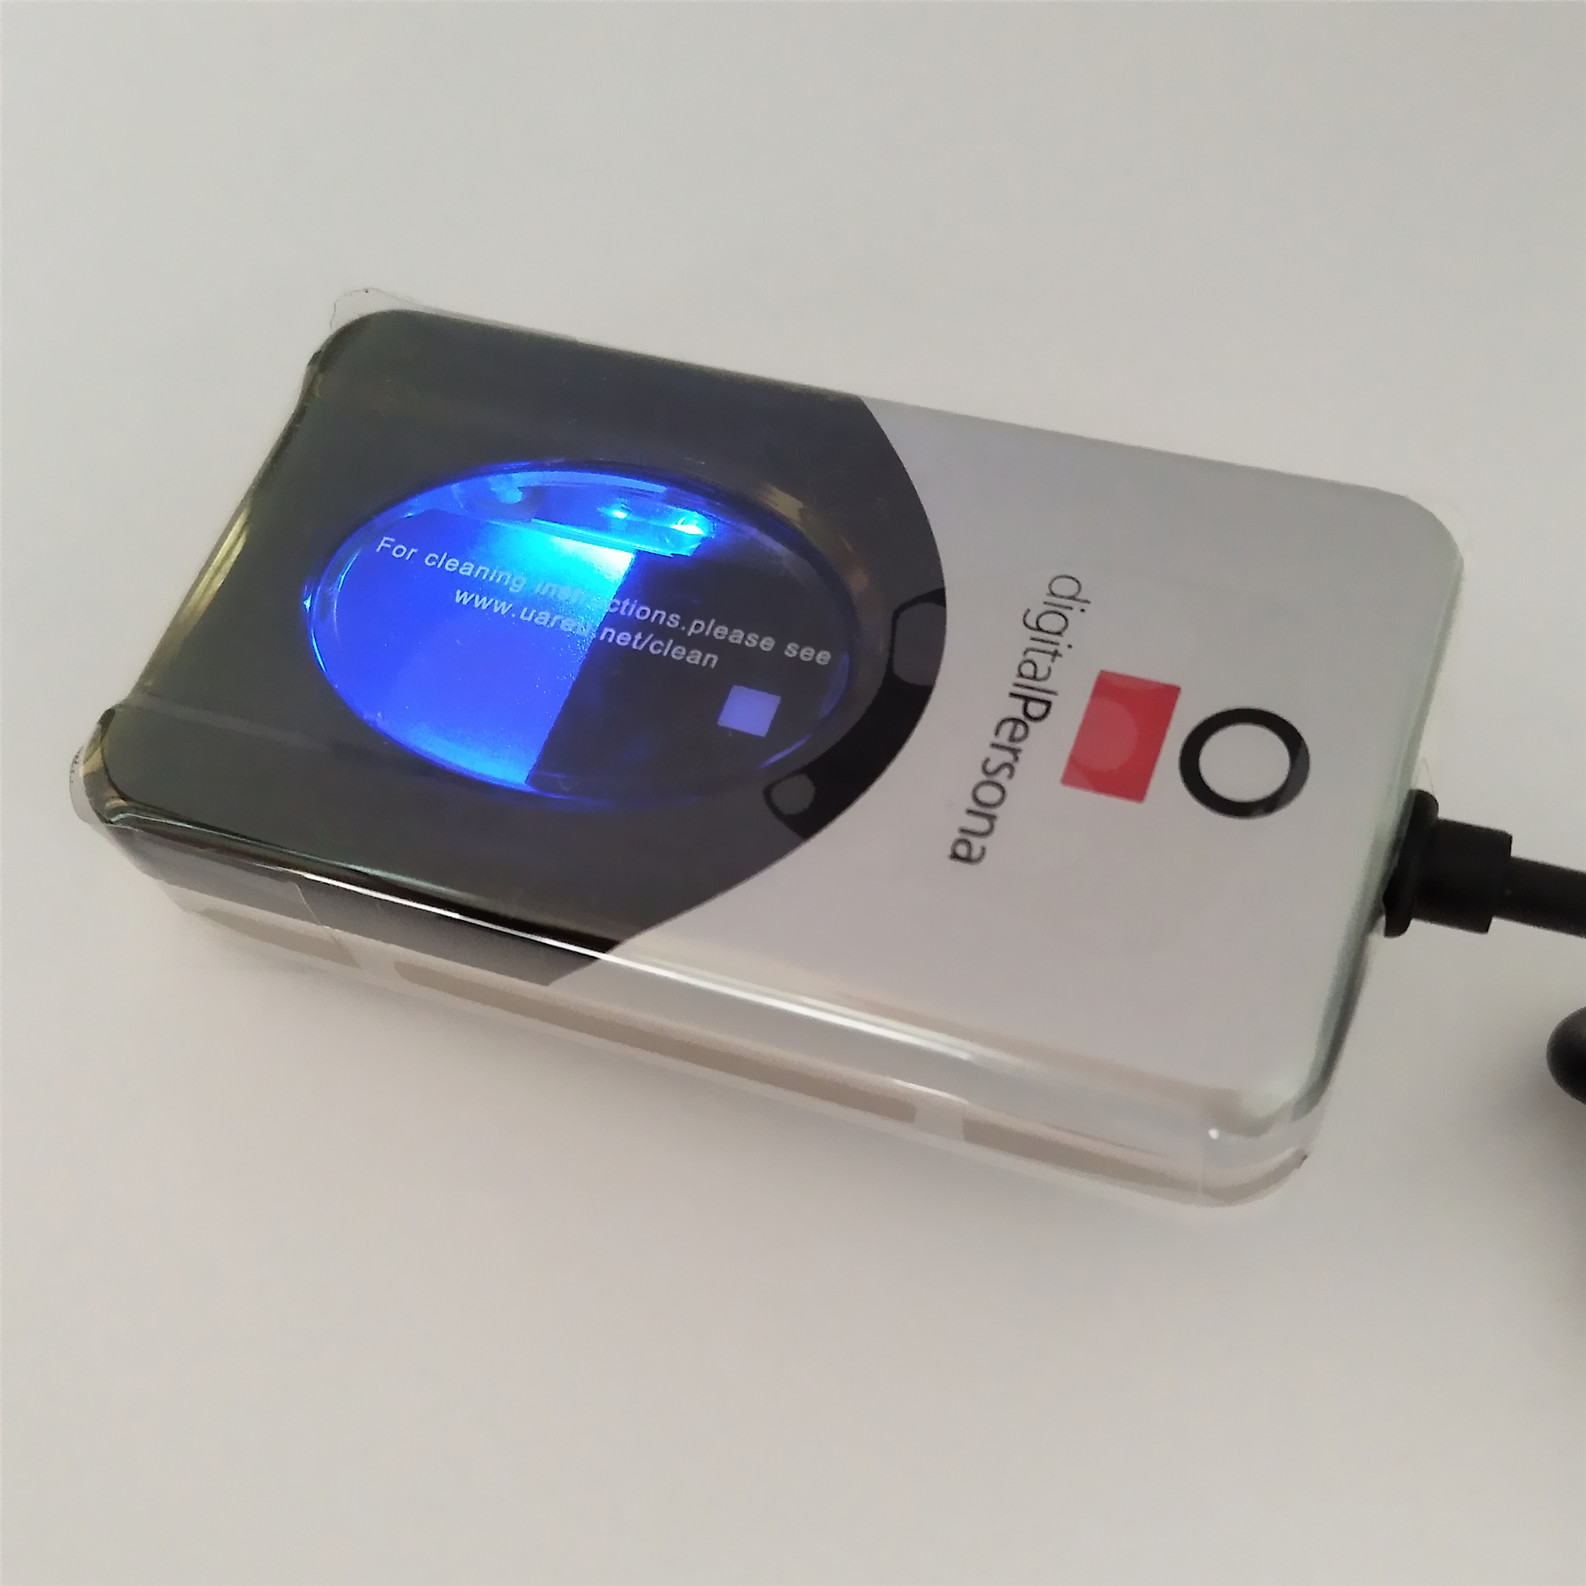 Uru4500 Digital Persona Biometric Scanner